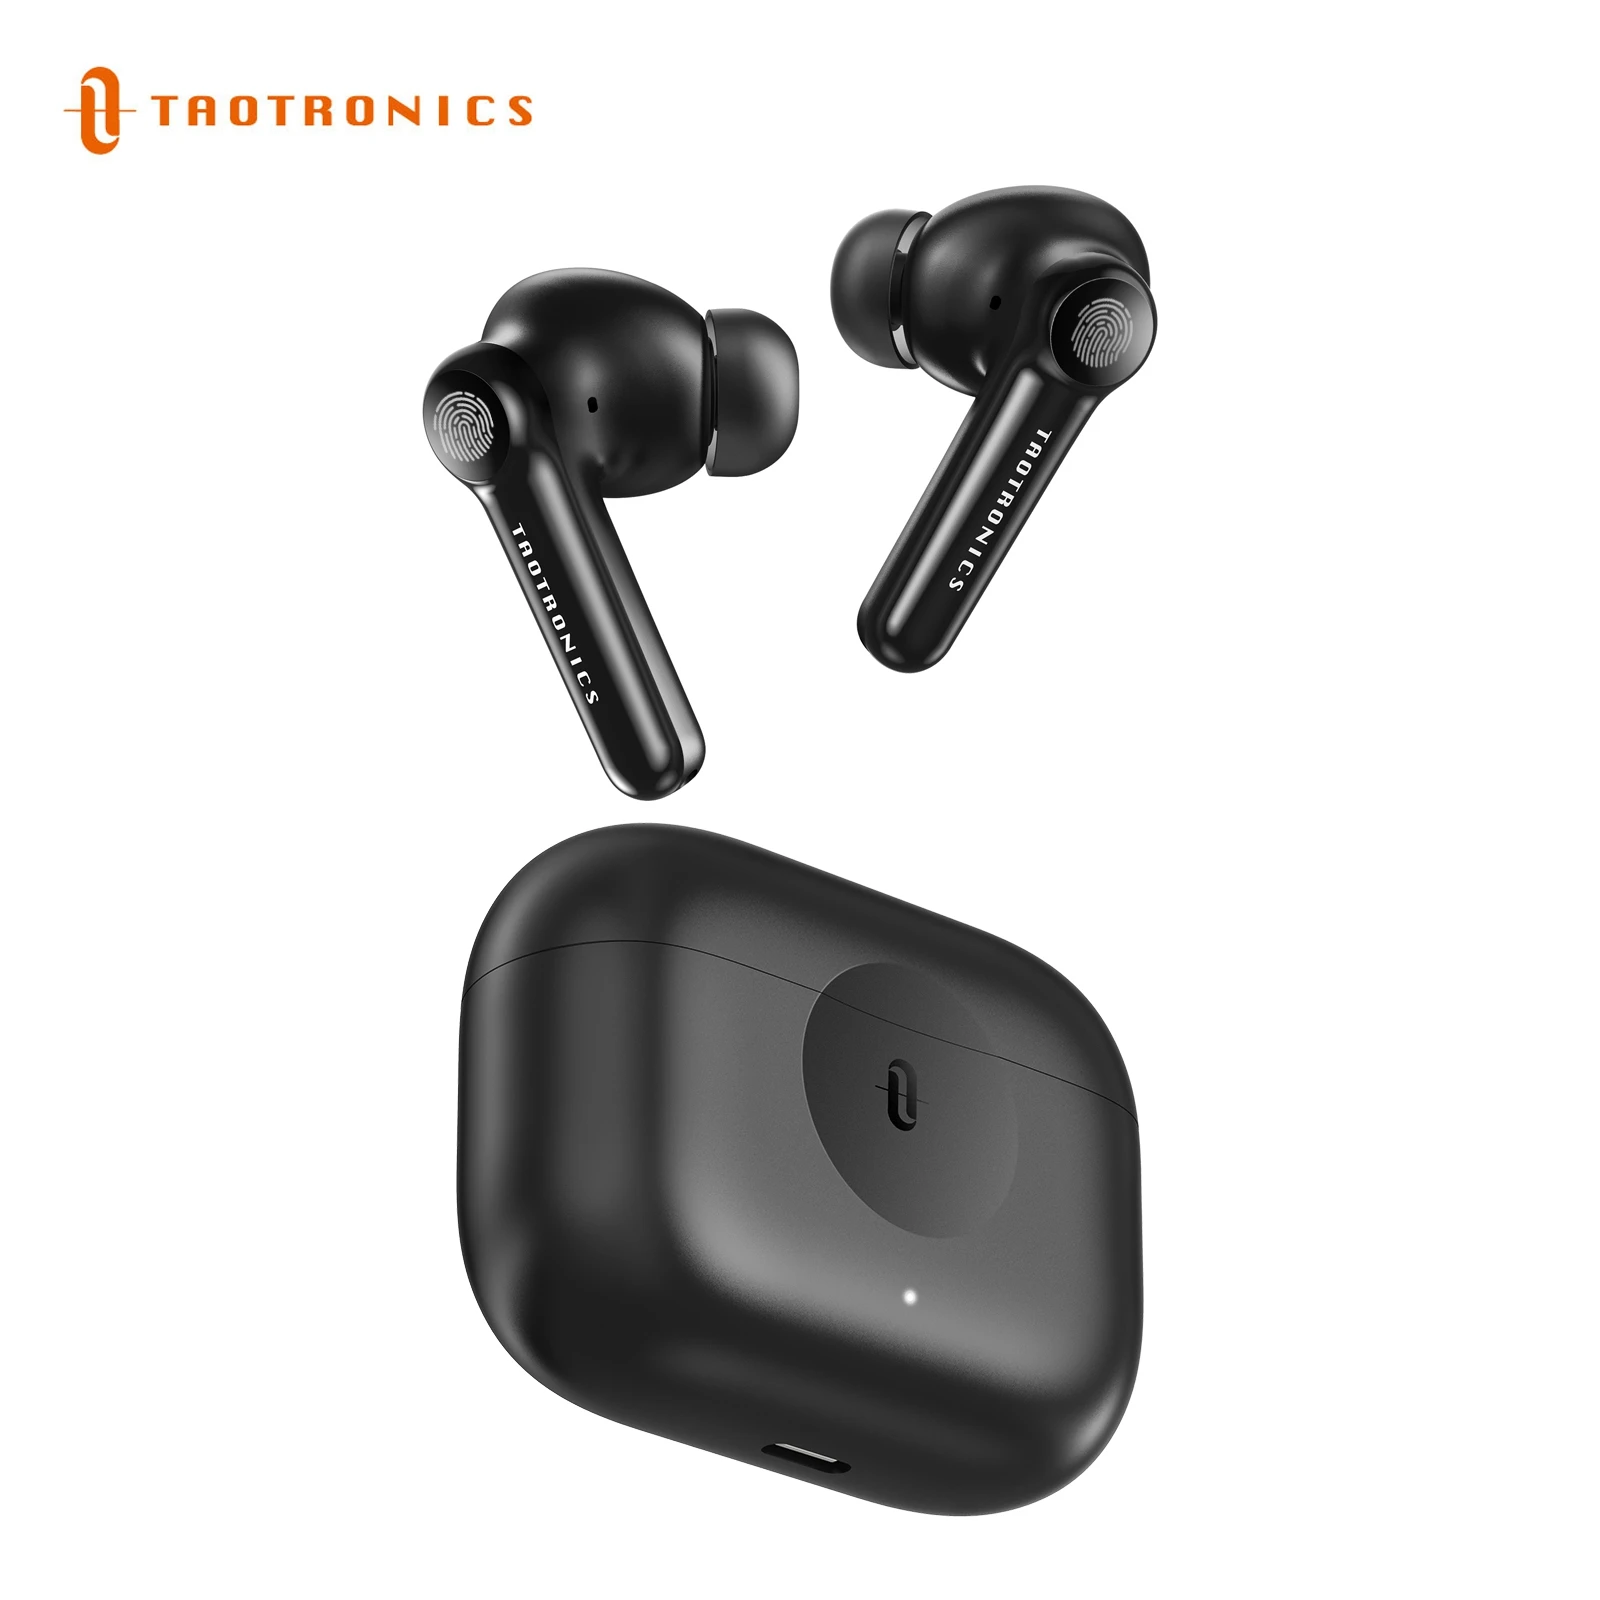 TaoTronics SoundLiberty 99 Sport ANS True Wireless Stereo Earphone Bluetooth V5.0 Headphone with Deep Bass IPX7 Waterproof enlarge